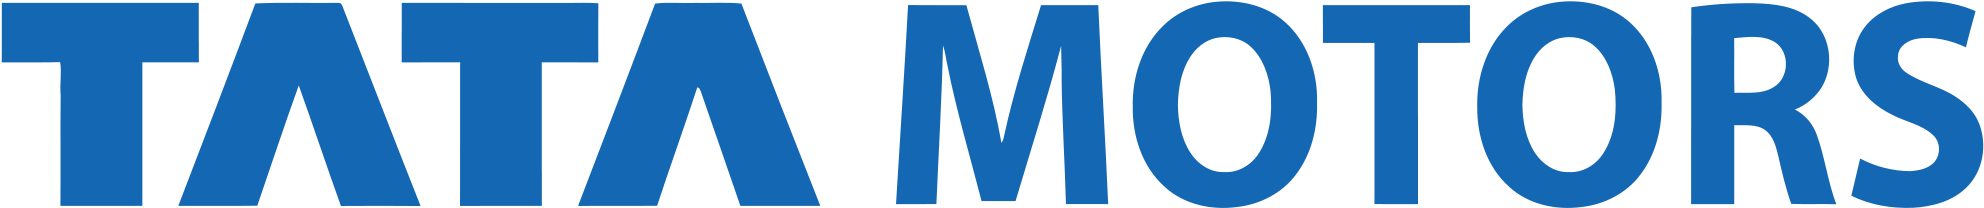 Tata Motors Logo Blue Background